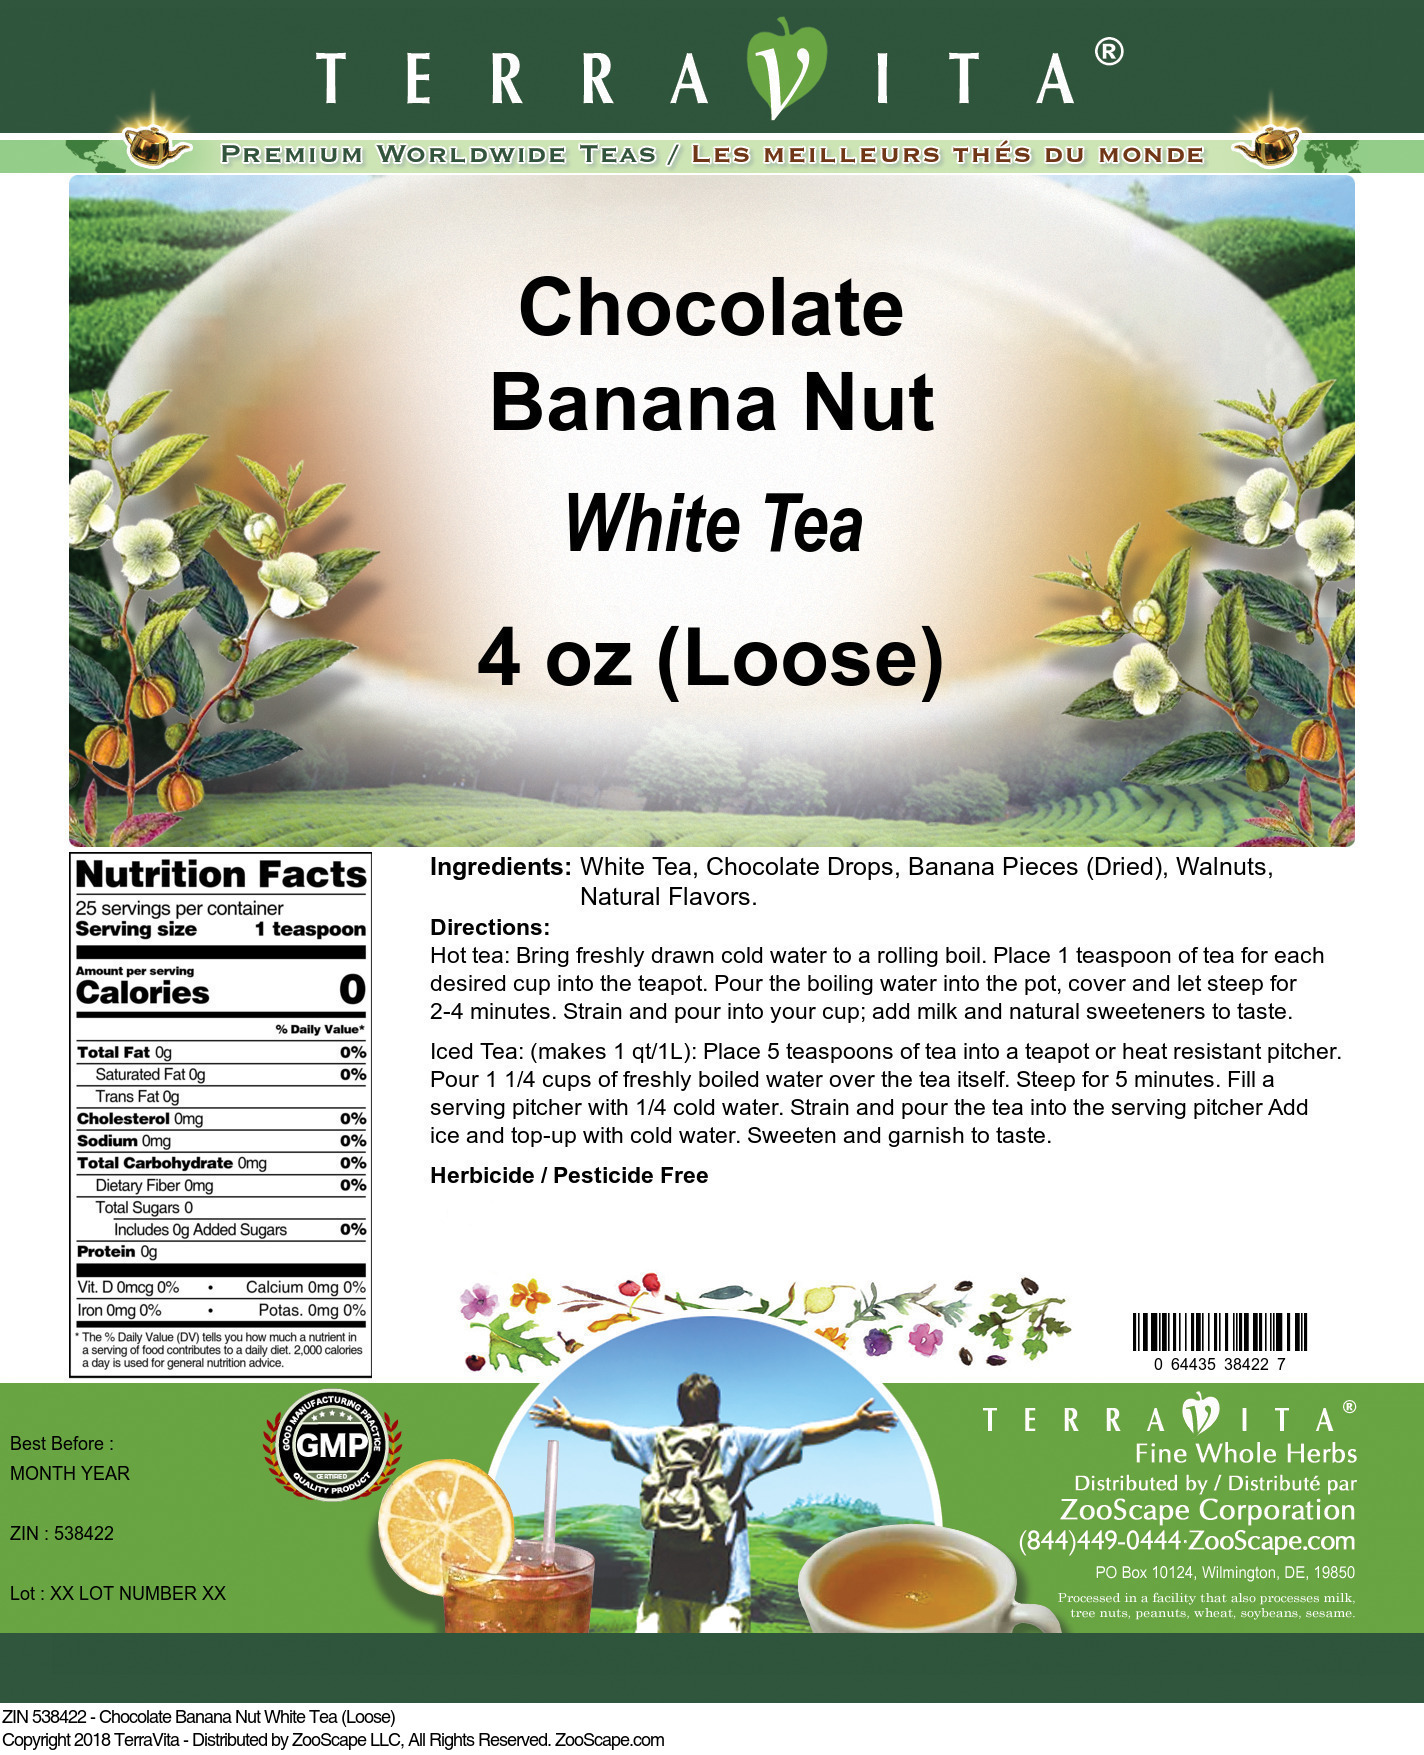 Chocolate Banana Nut White Tea (Loose) - Label